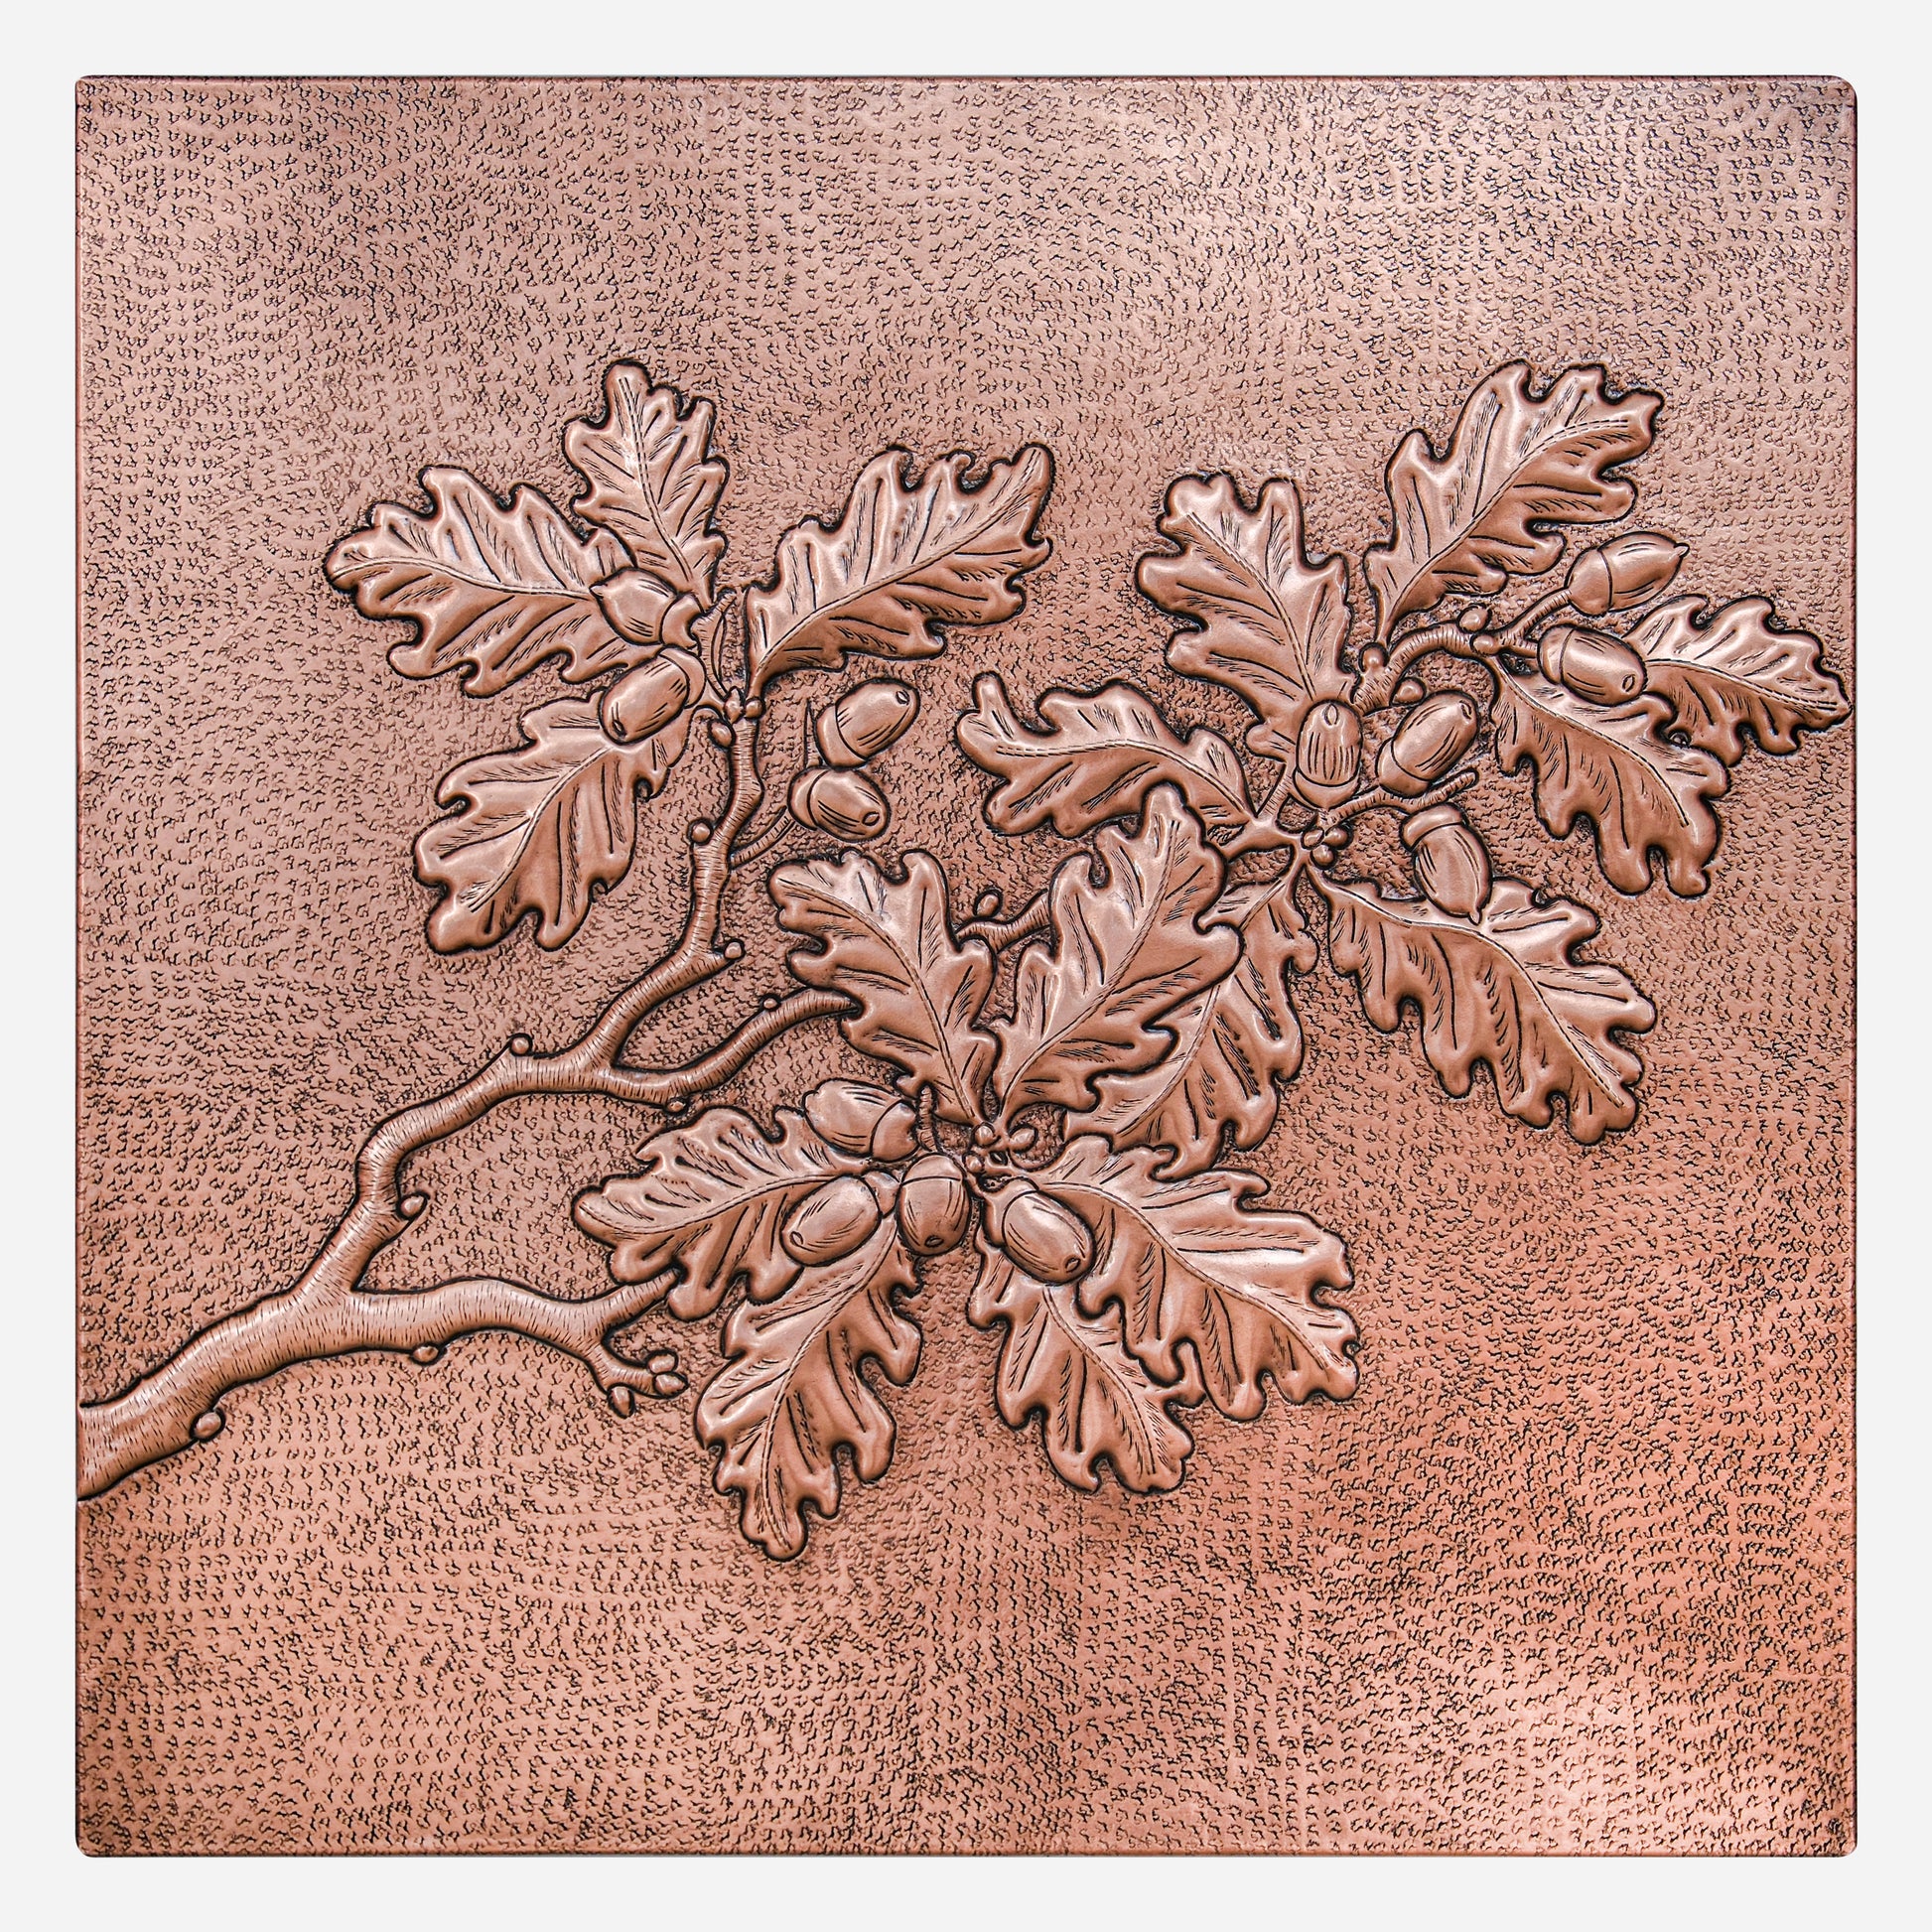 Copper Backsplash Panel (Oak Tree Branches and Acorns)